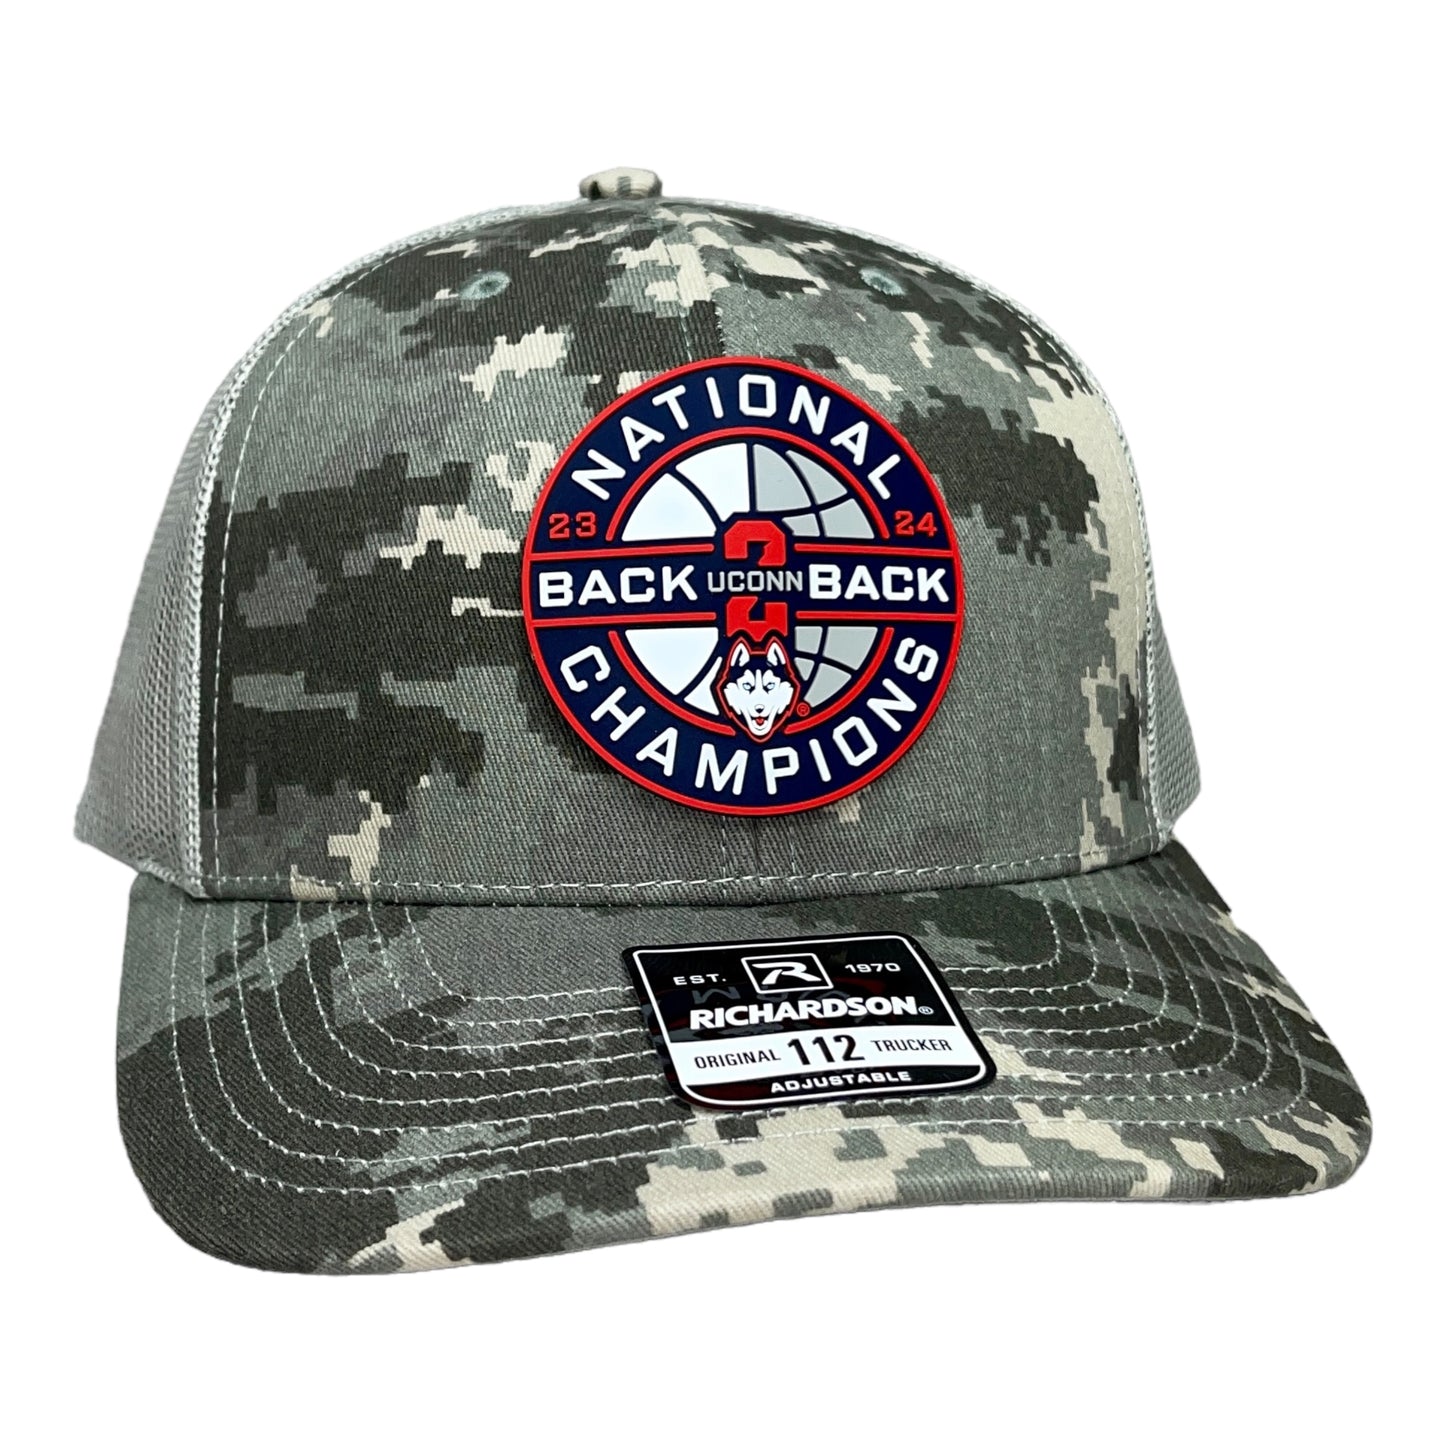 UConn Huskies Back-To-Back NCAA Men's Basketball National Champions 3D Snapback Trucker Hat- Military Digital Camo